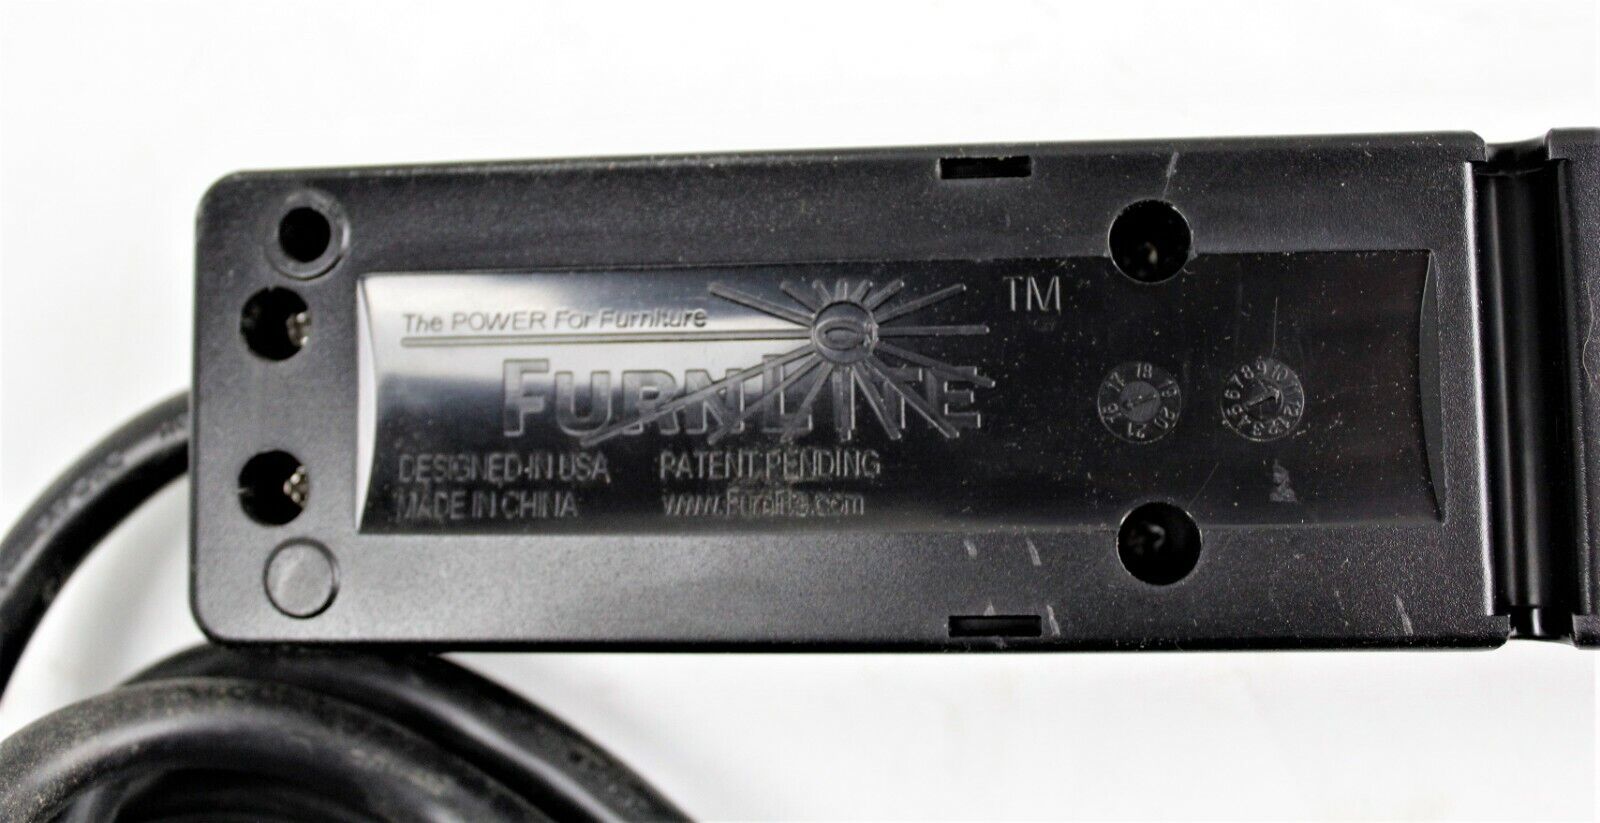 LOT of 2 - FURNLITE FC-710 -  4 OUTLET POWER SUPPLY w/Child Safety Locks FURNLITE FC-710 - фотография #3